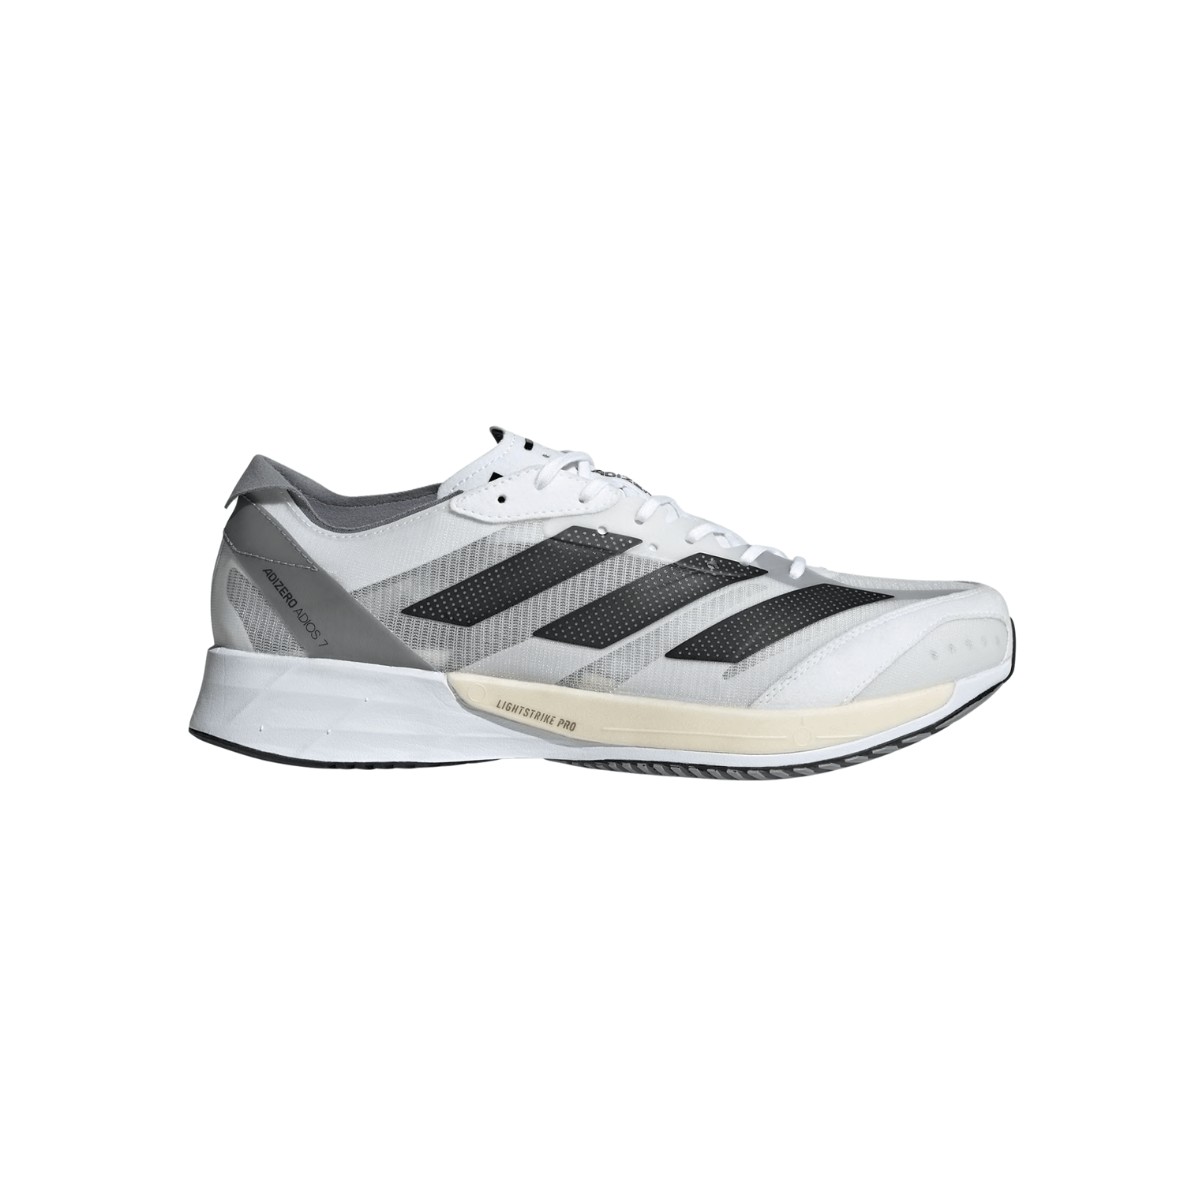 Chaussures Adidas Adizero Adios 7 White Grey Black AW22, Taille UK 11